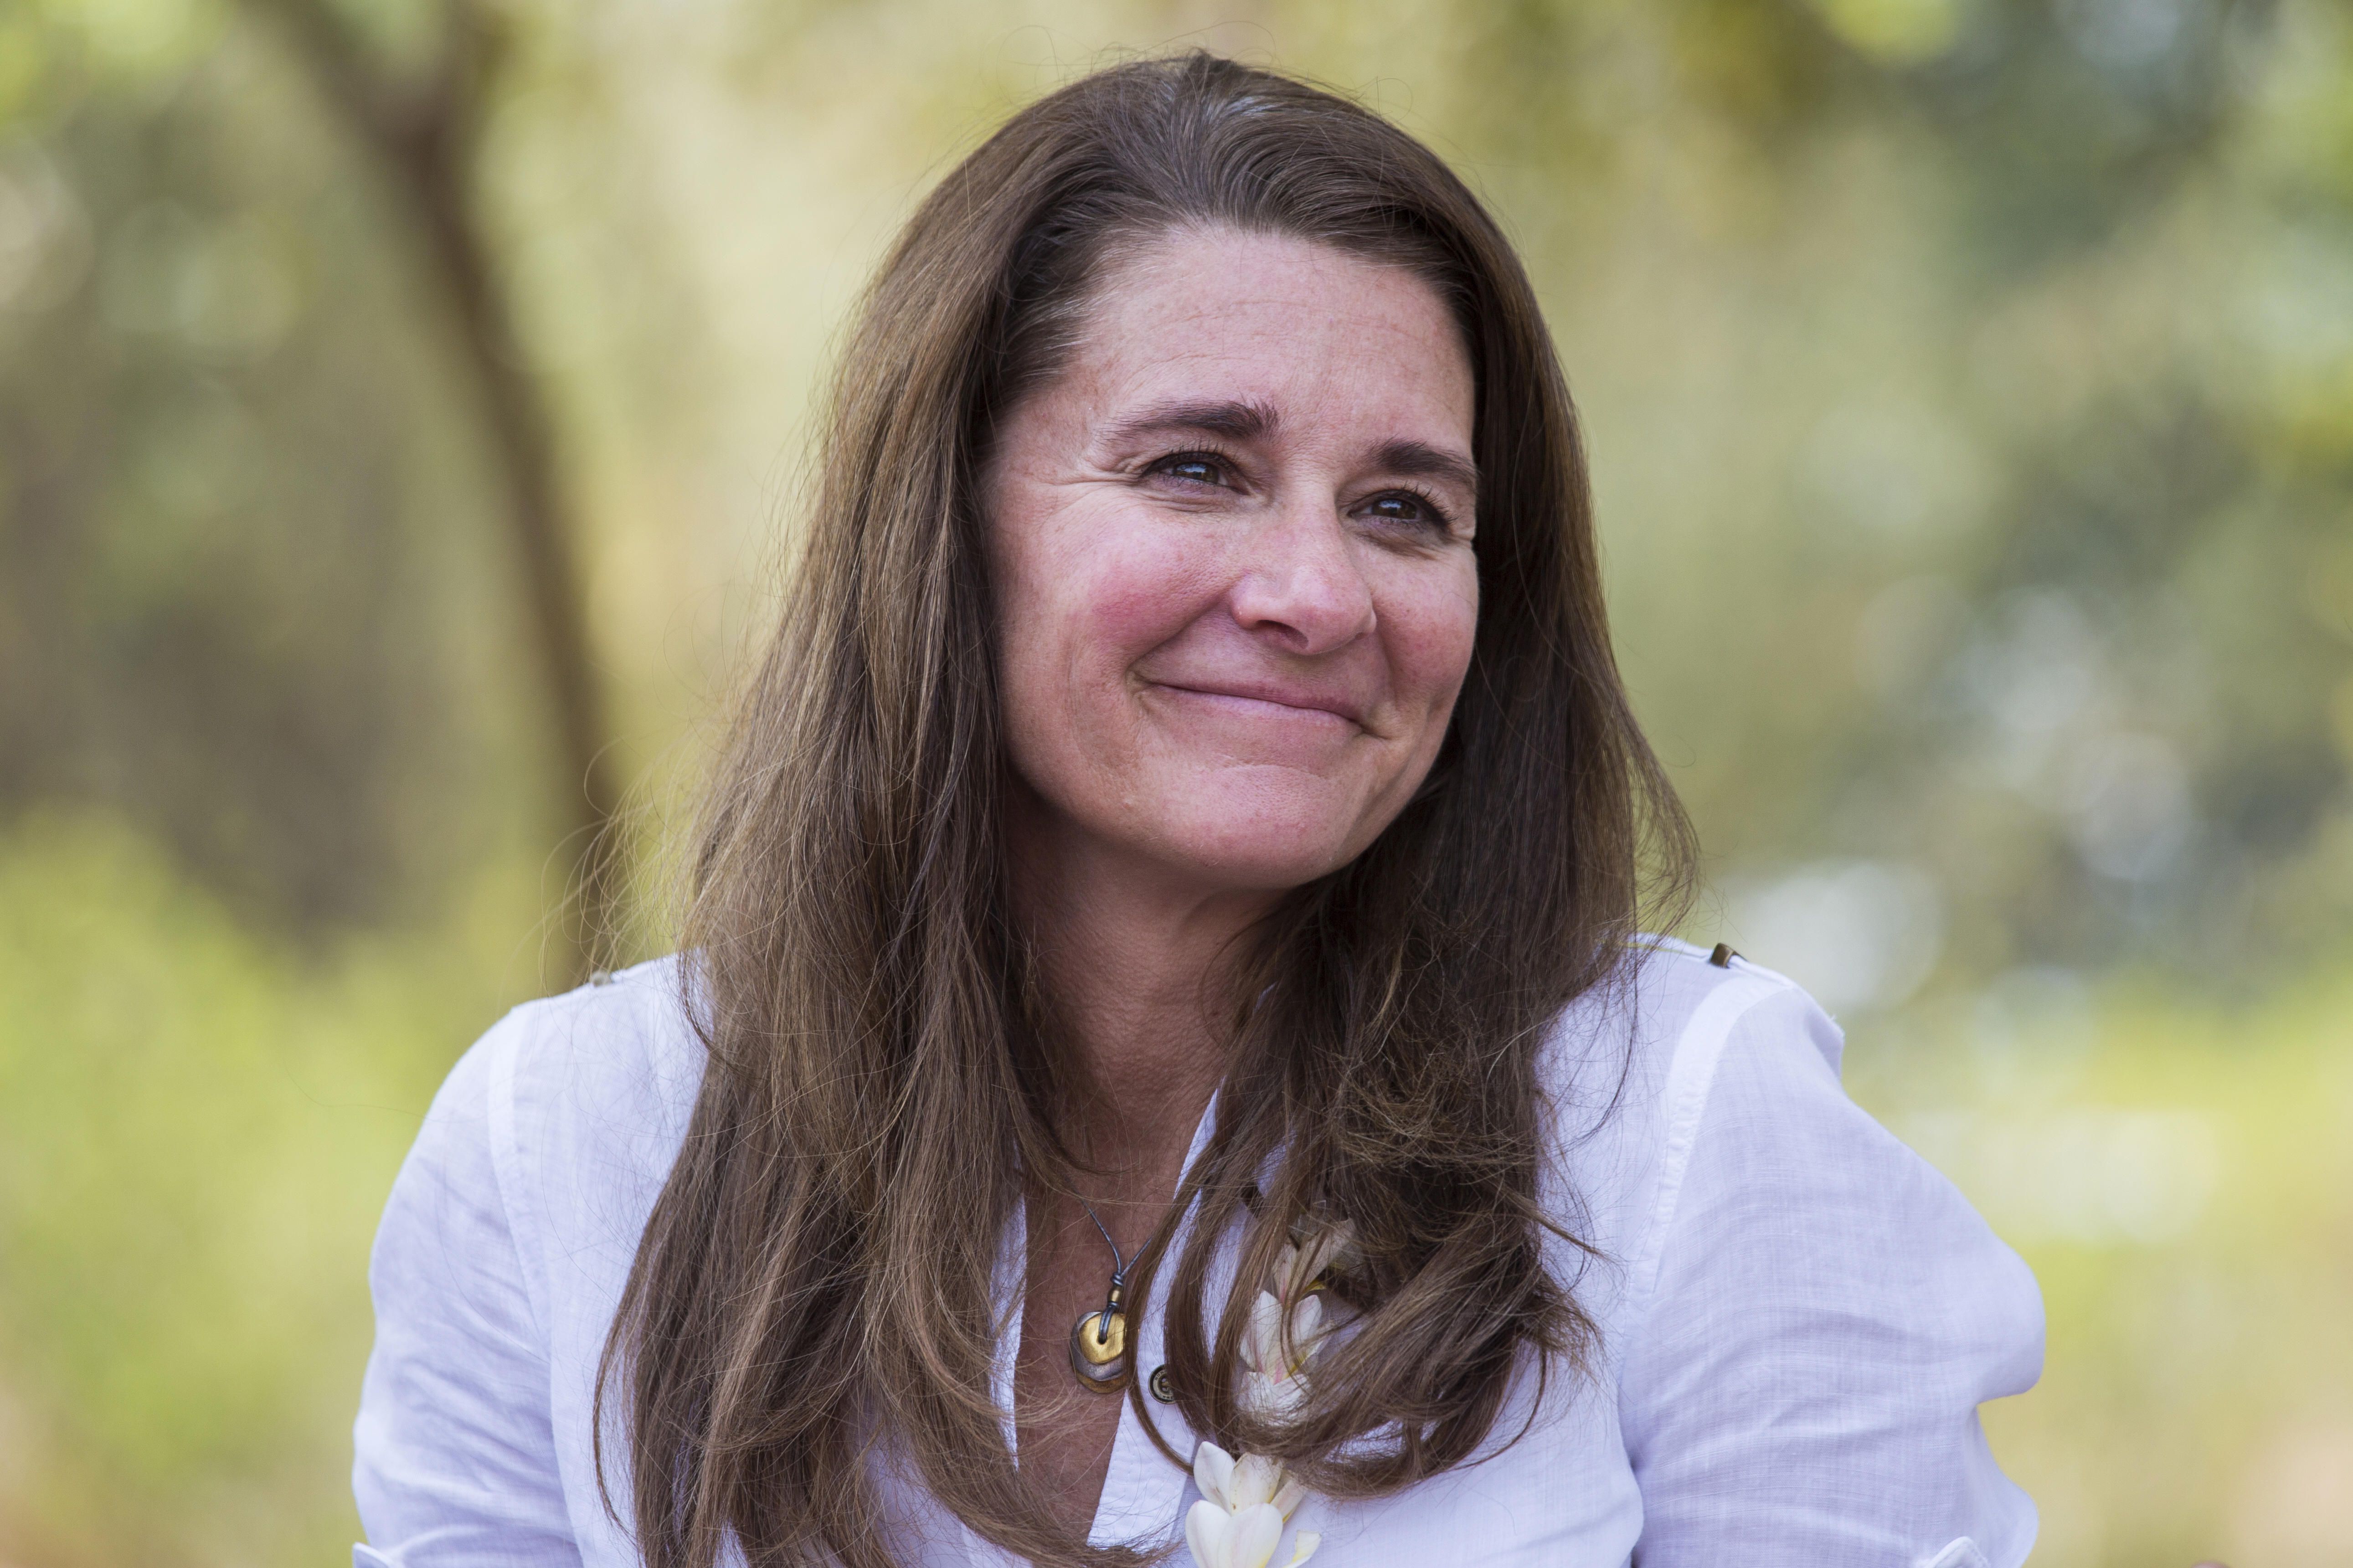 For women in tech, Melinda Gates says mentoring matters - CNET